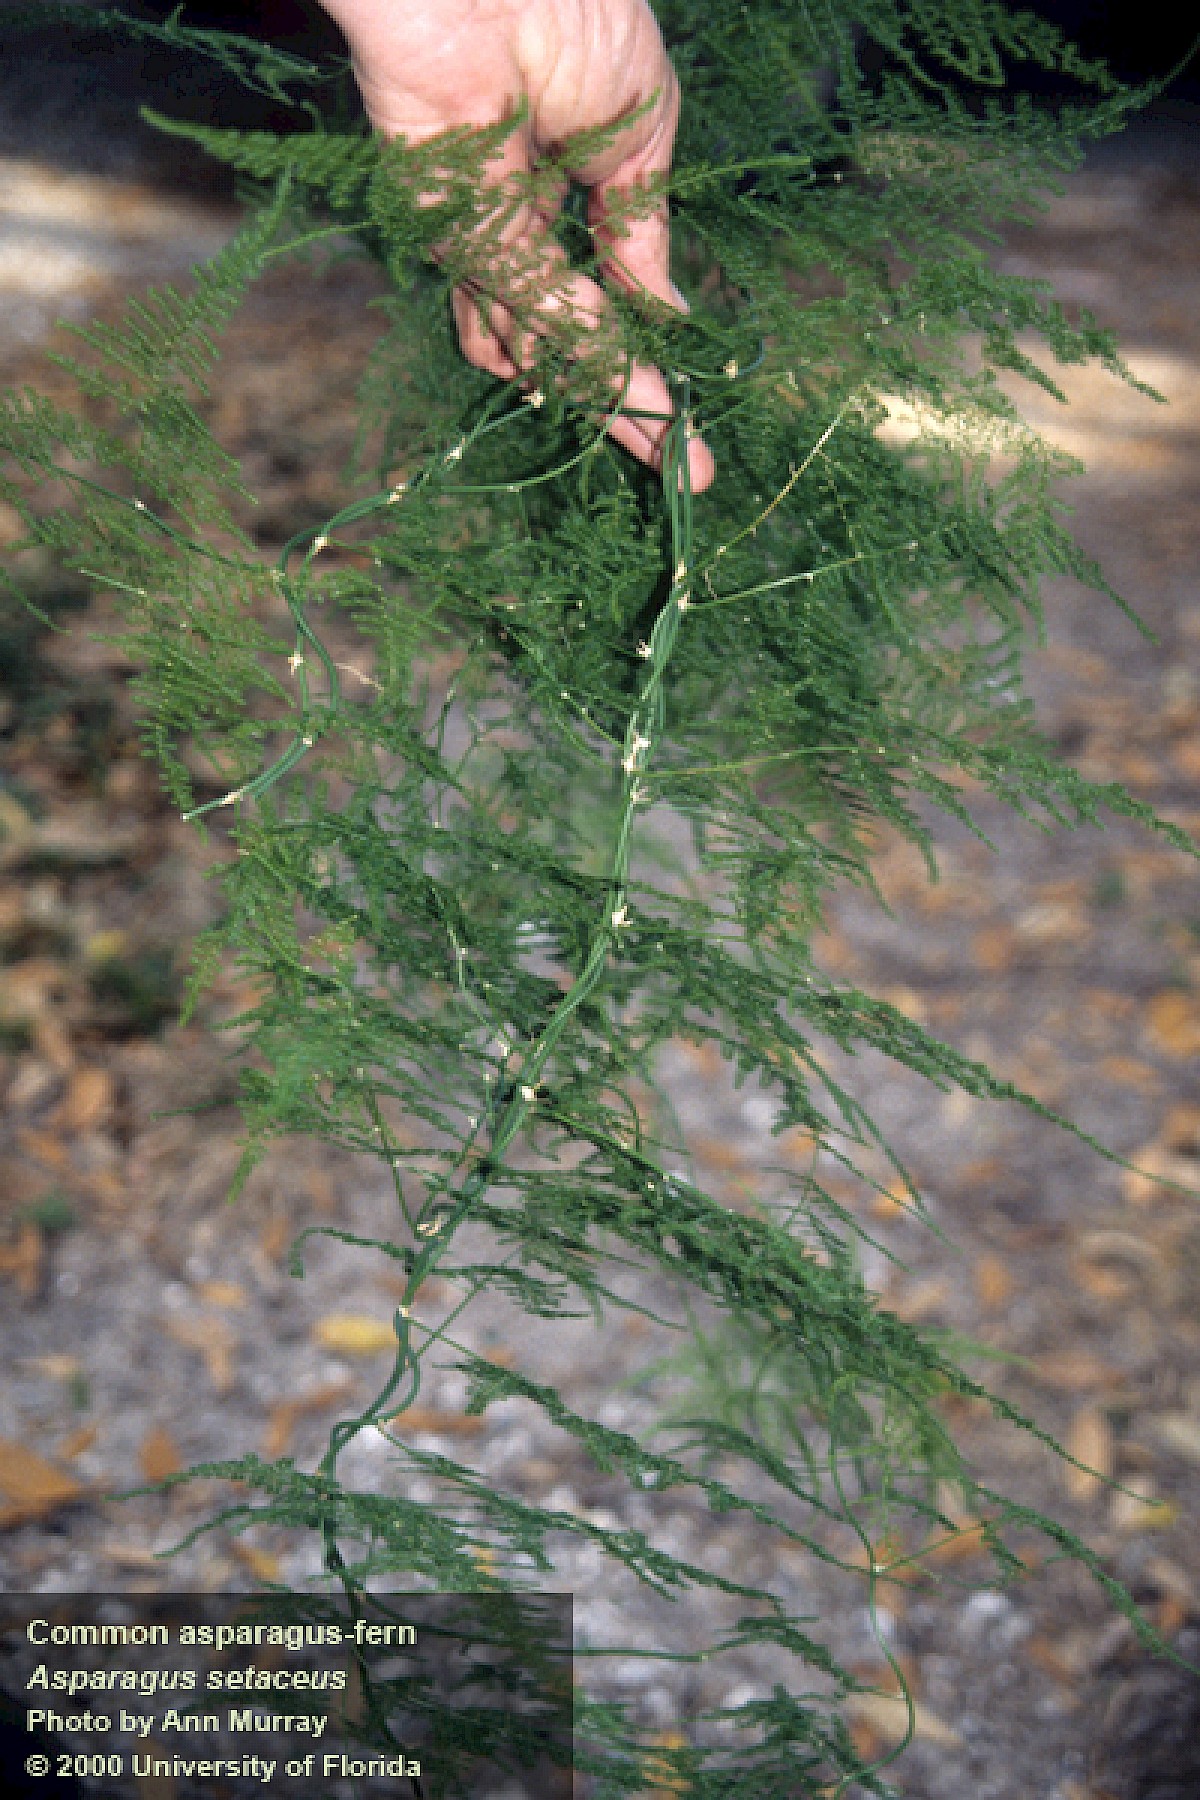 Asparagus Fern - Asparagus densiflorous 'sprengeri